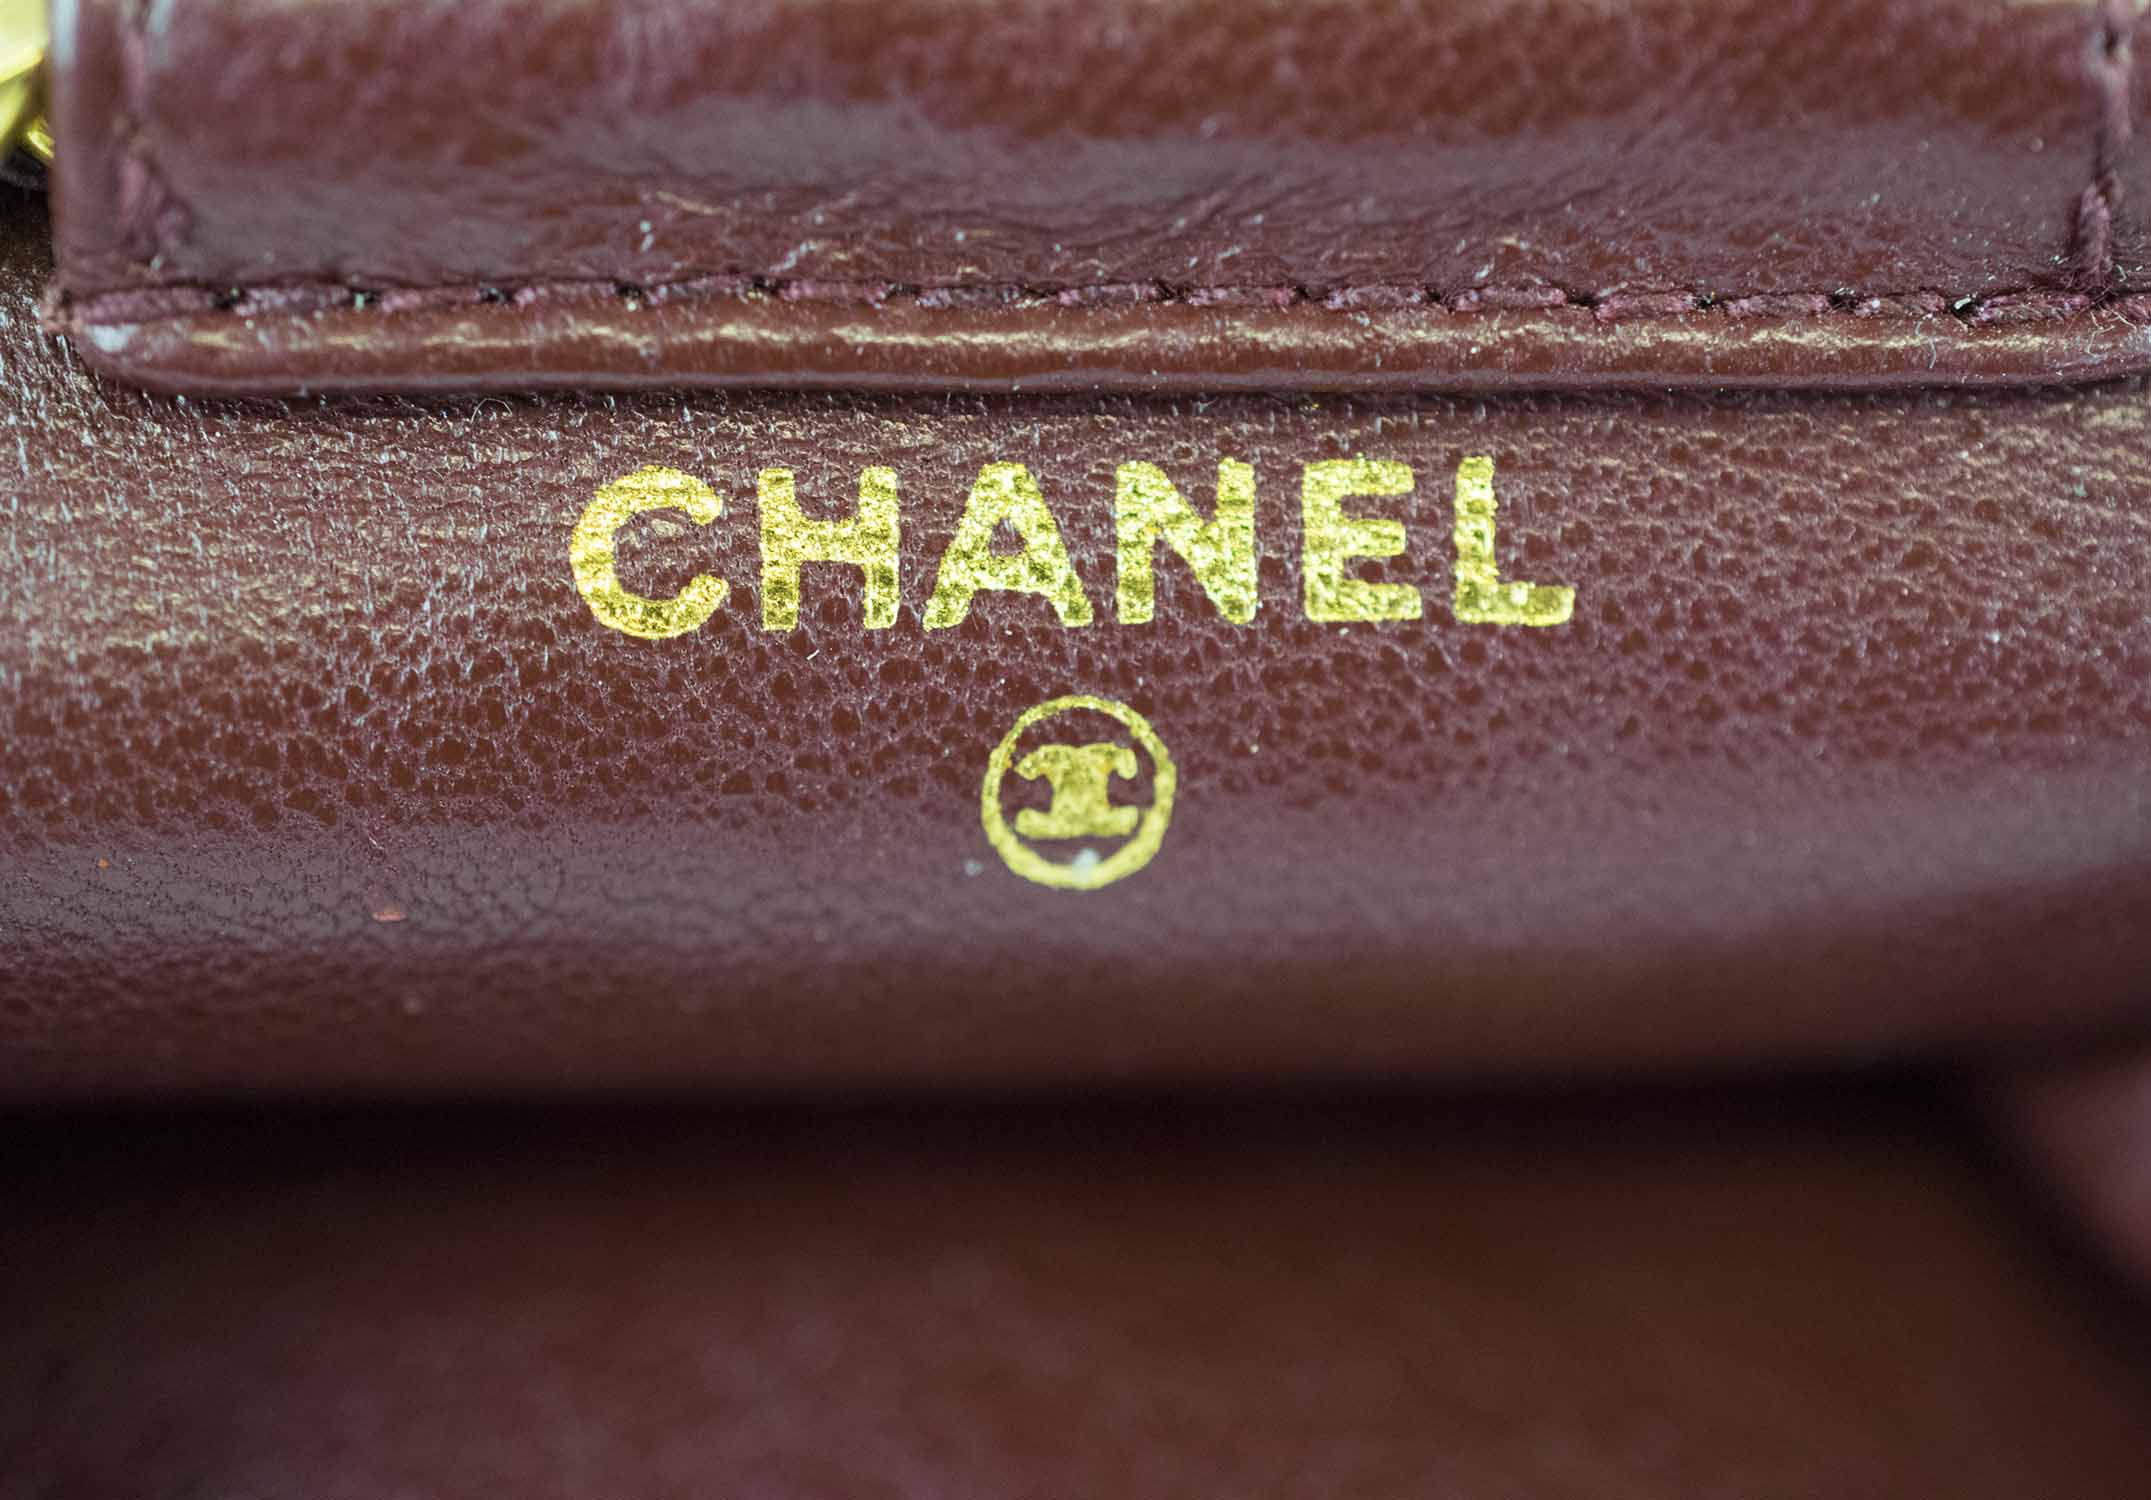 chanel sling bag mini leather